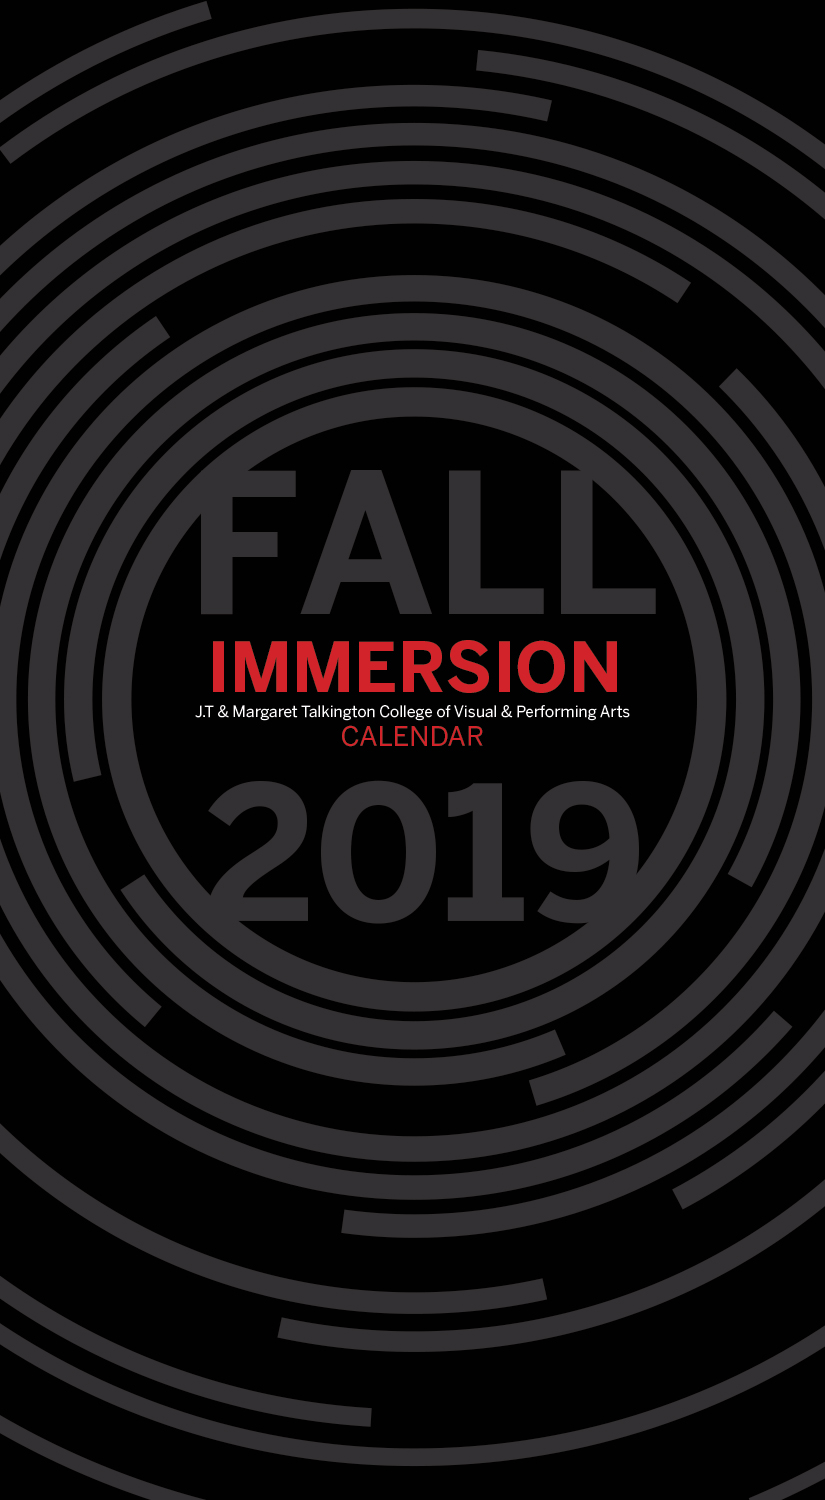 Fall 2019 Immersion Calendar